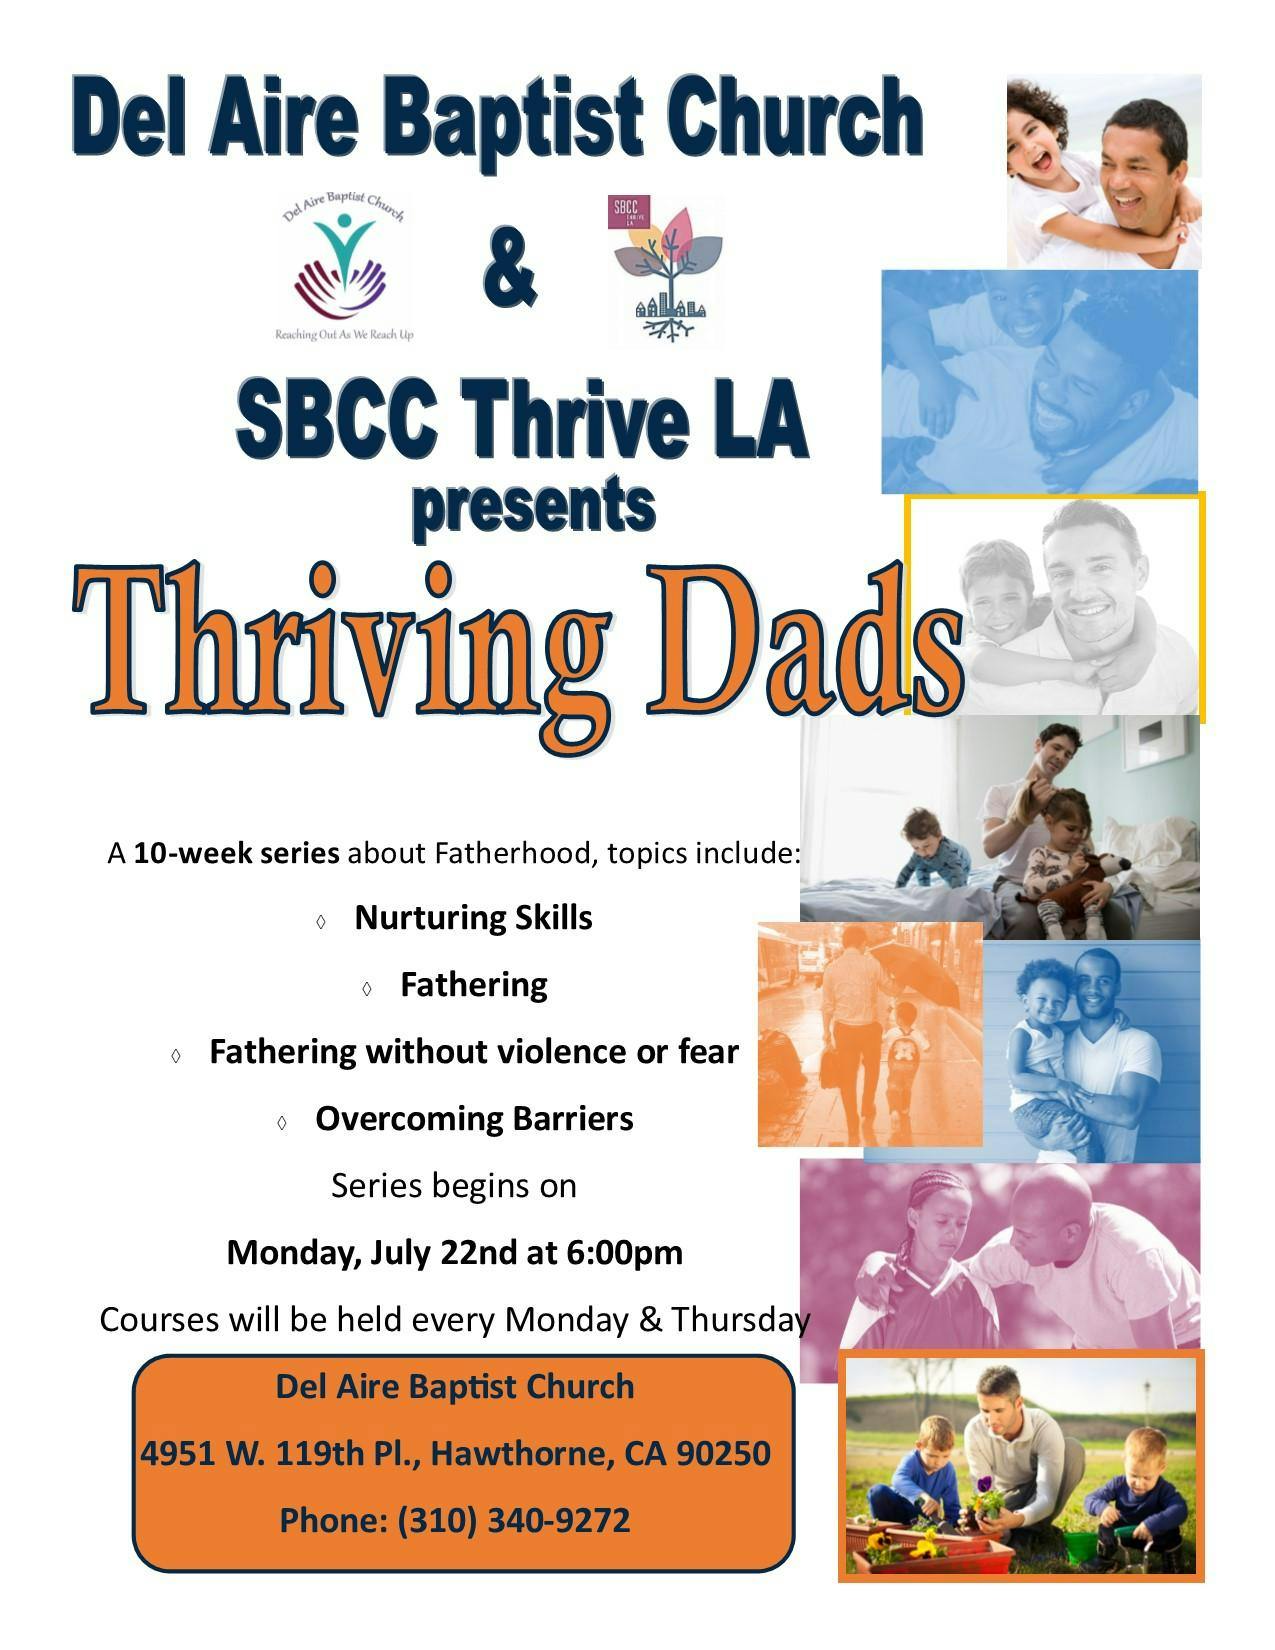 Thriving Dads: 10-Week Series About Fatherhood